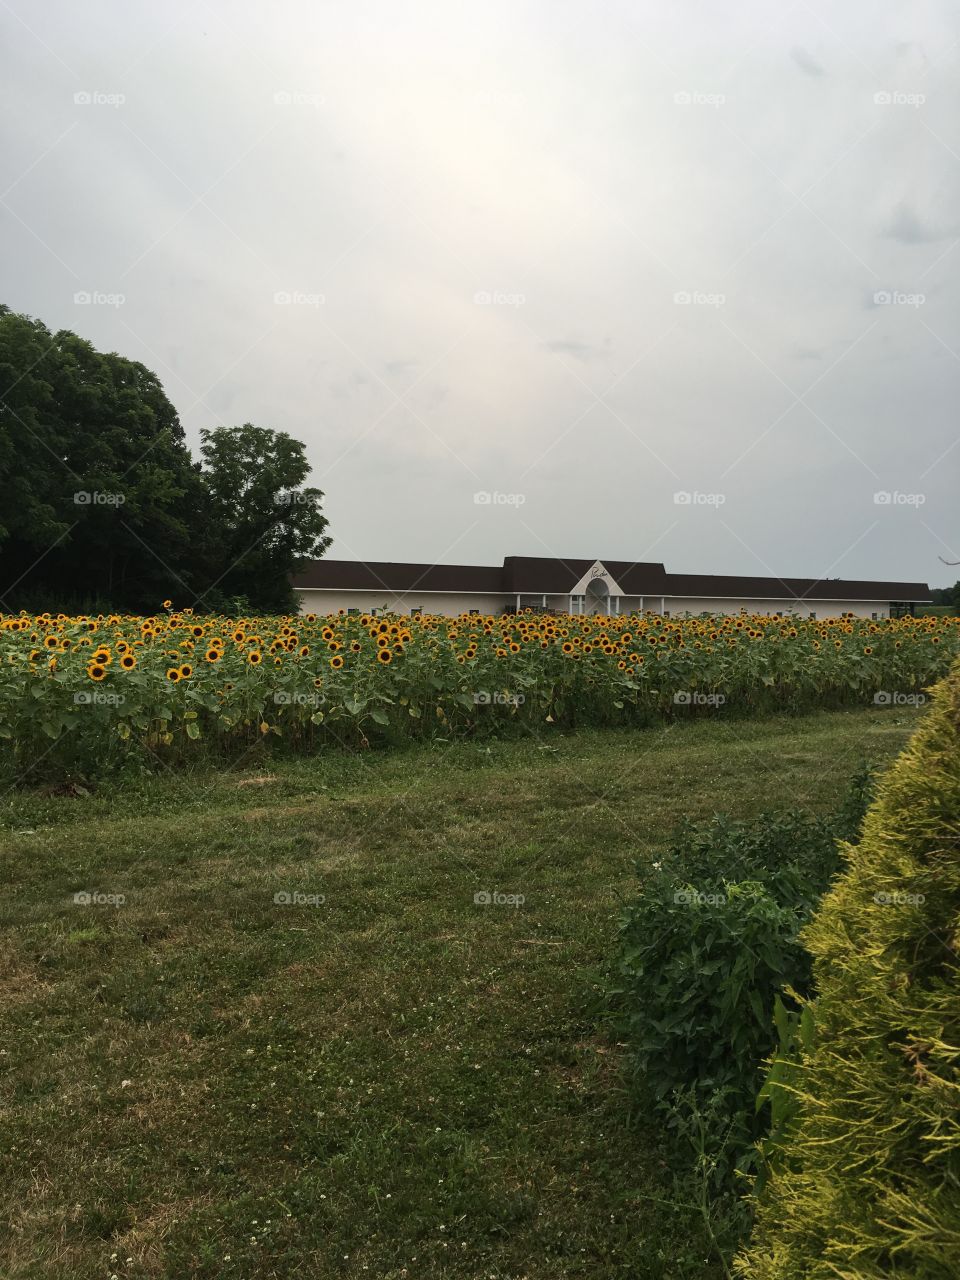 A field of beautiful sunflowers.